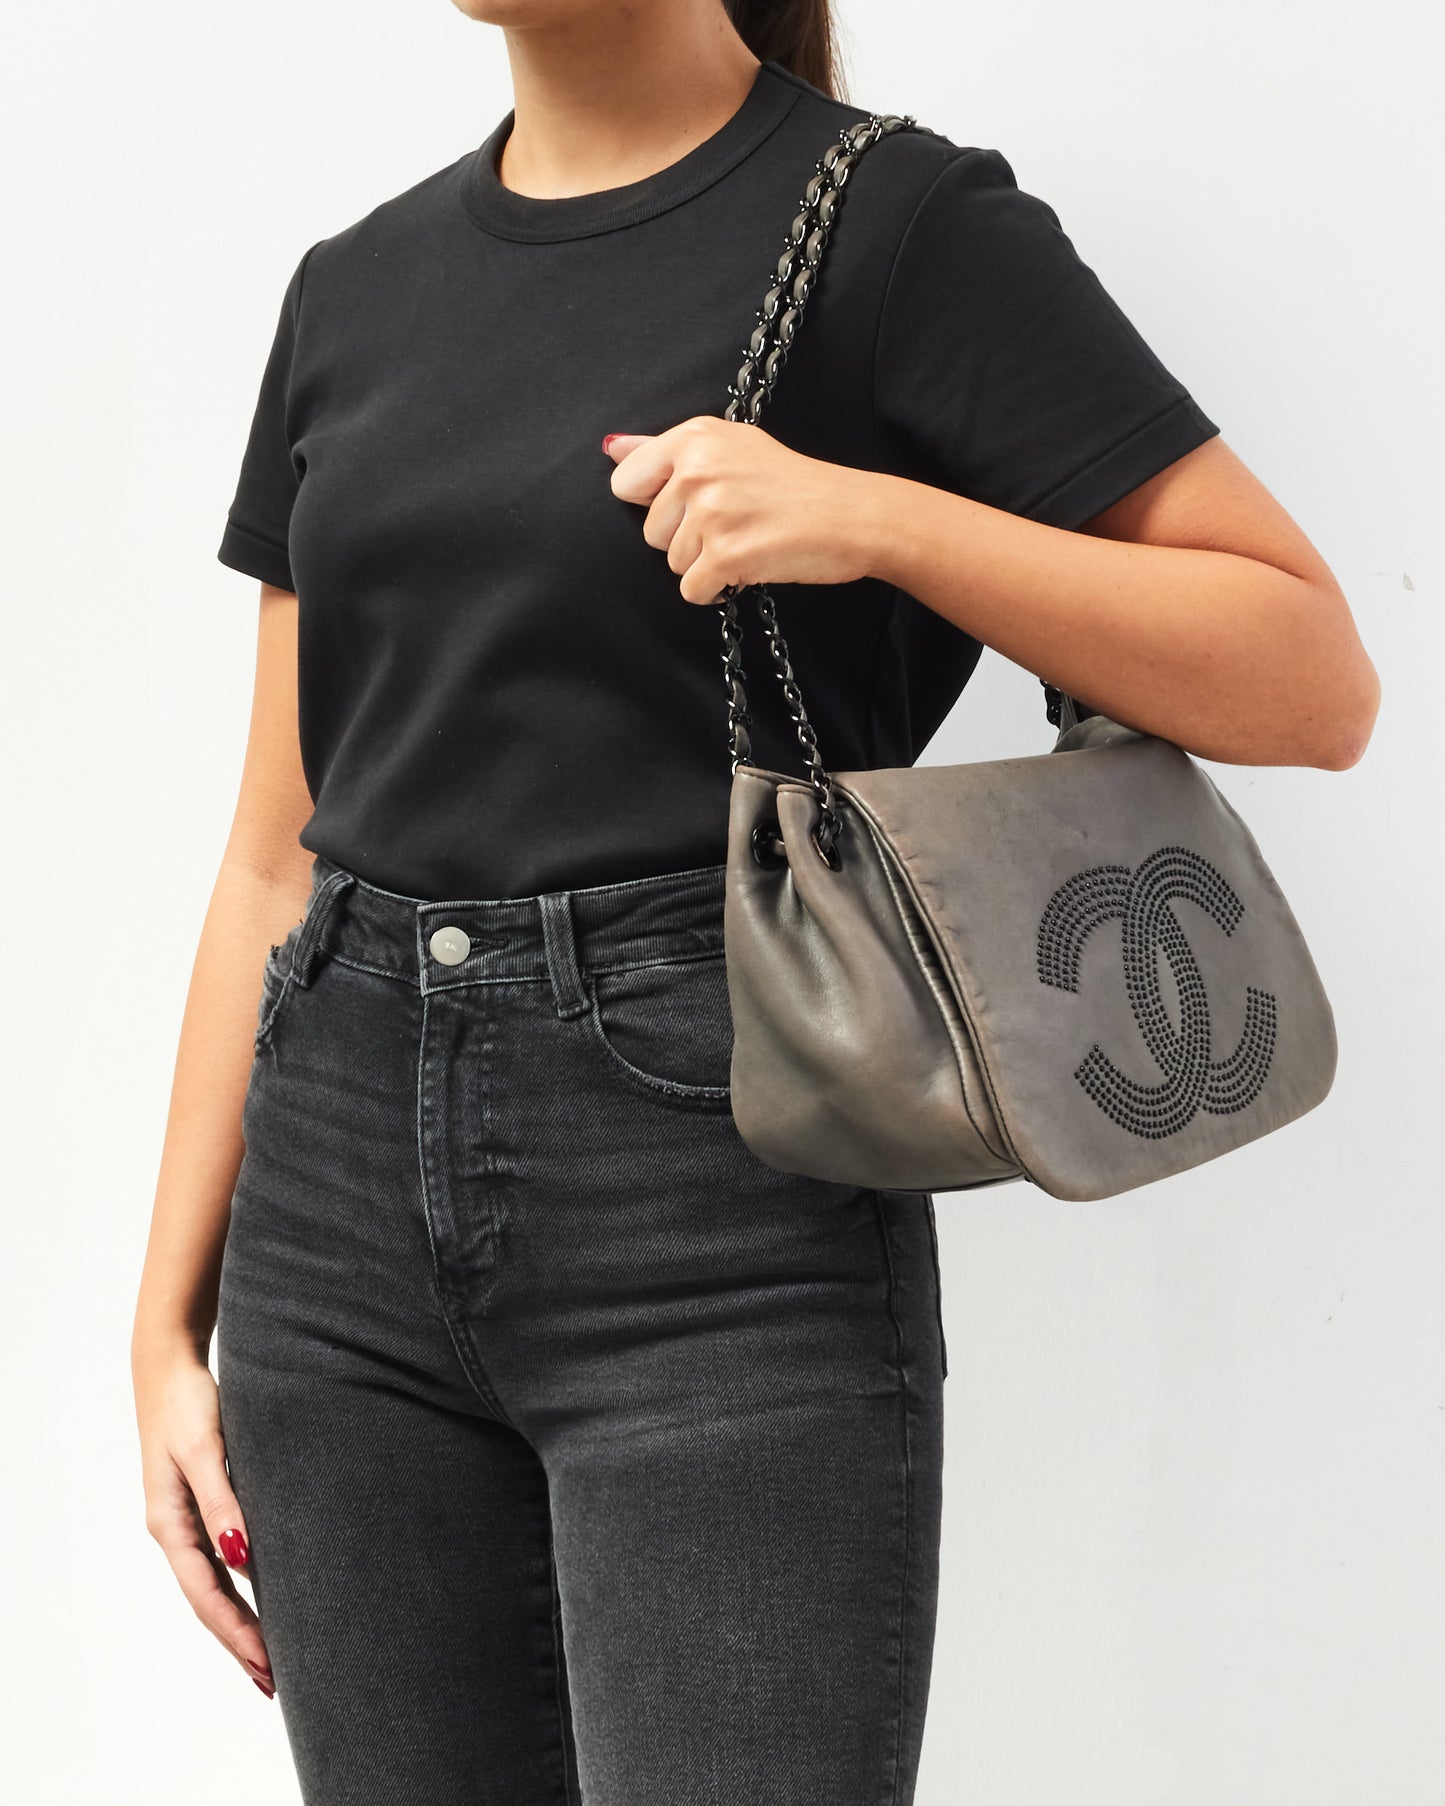 Chanel Grey Leather Studded CC Accordion Bag